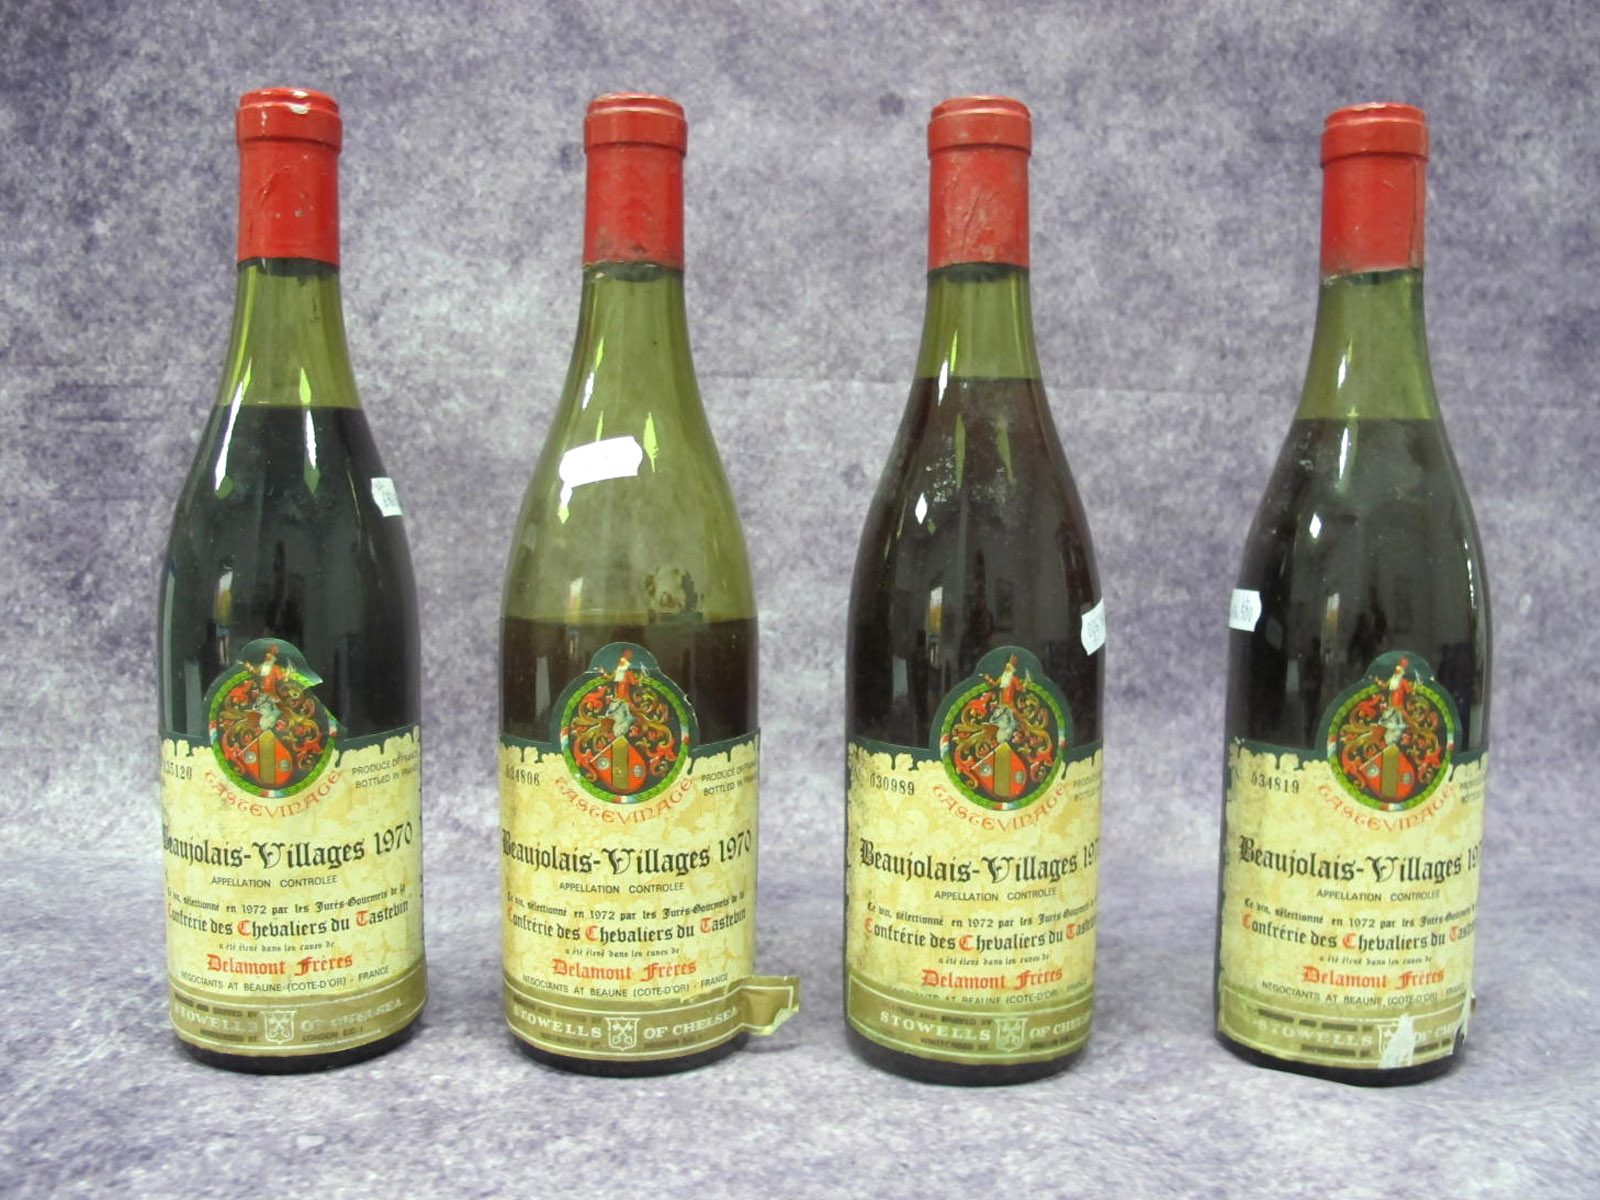 Wine - Beaujolais Villages 1970, bottles numbered 035120, 034806, 030989, 034819, 4 bottles.